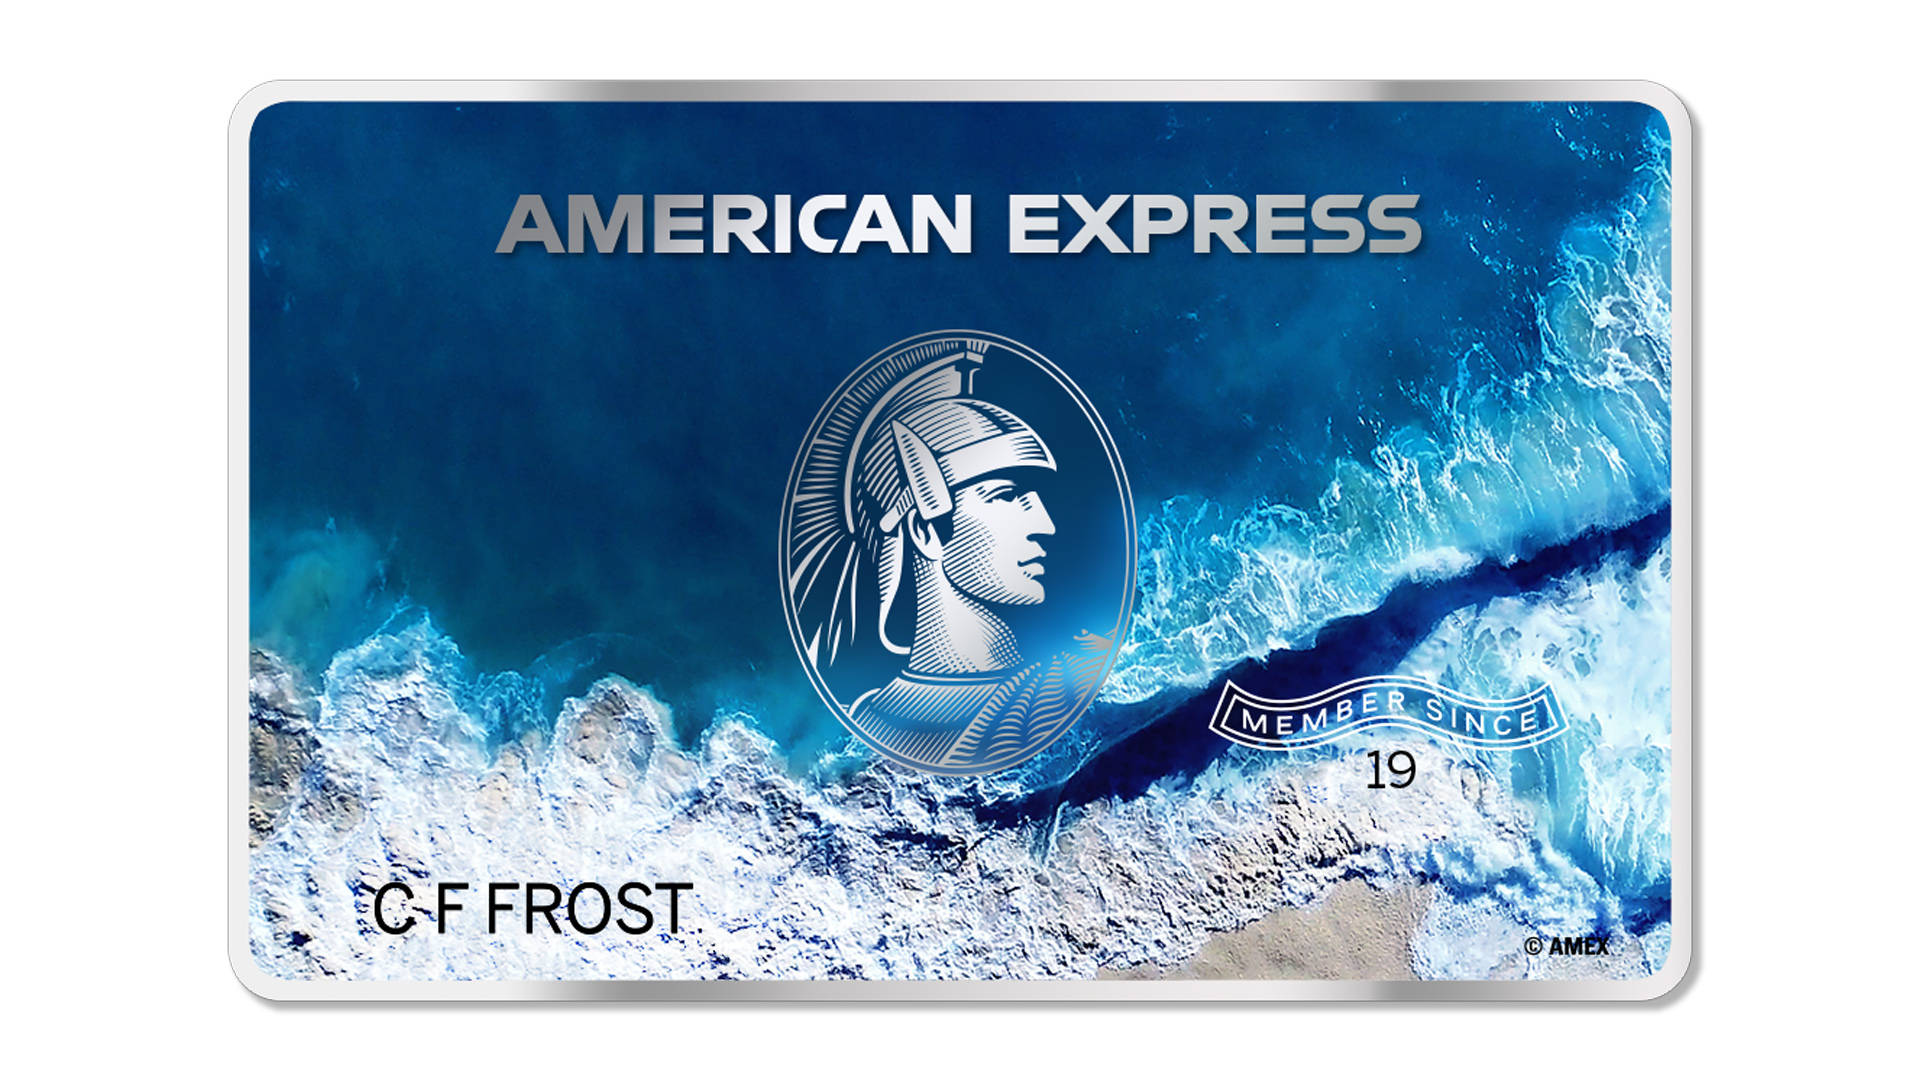 American Express Blue Marine Card Background